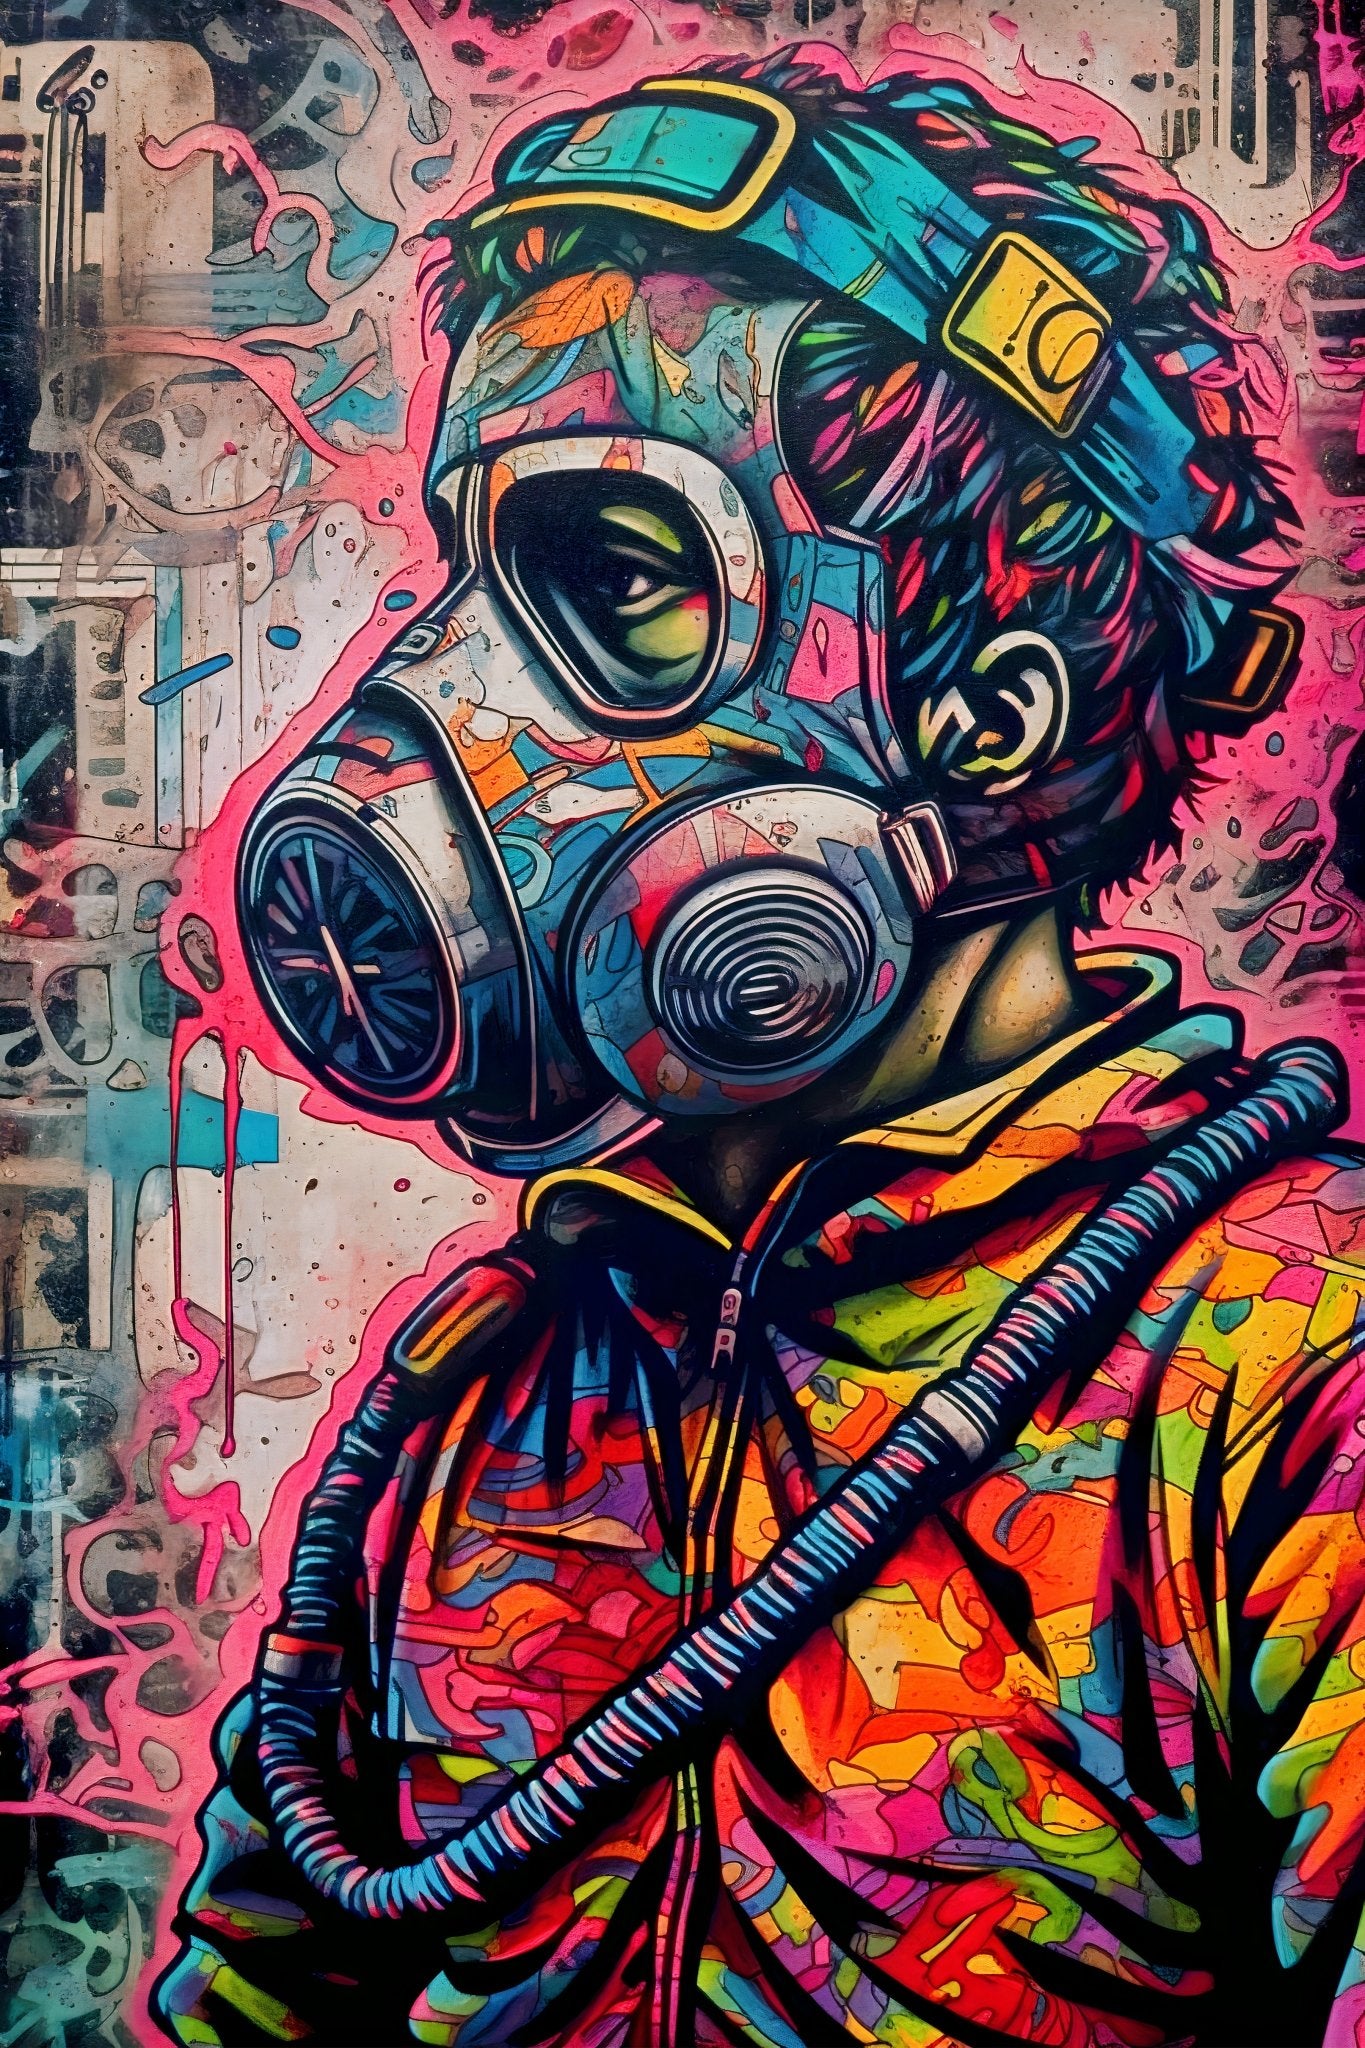 Graffiti Street Art Abstract Wall Art | Urban Spray Paint Illustration Poster - Vivid Roads